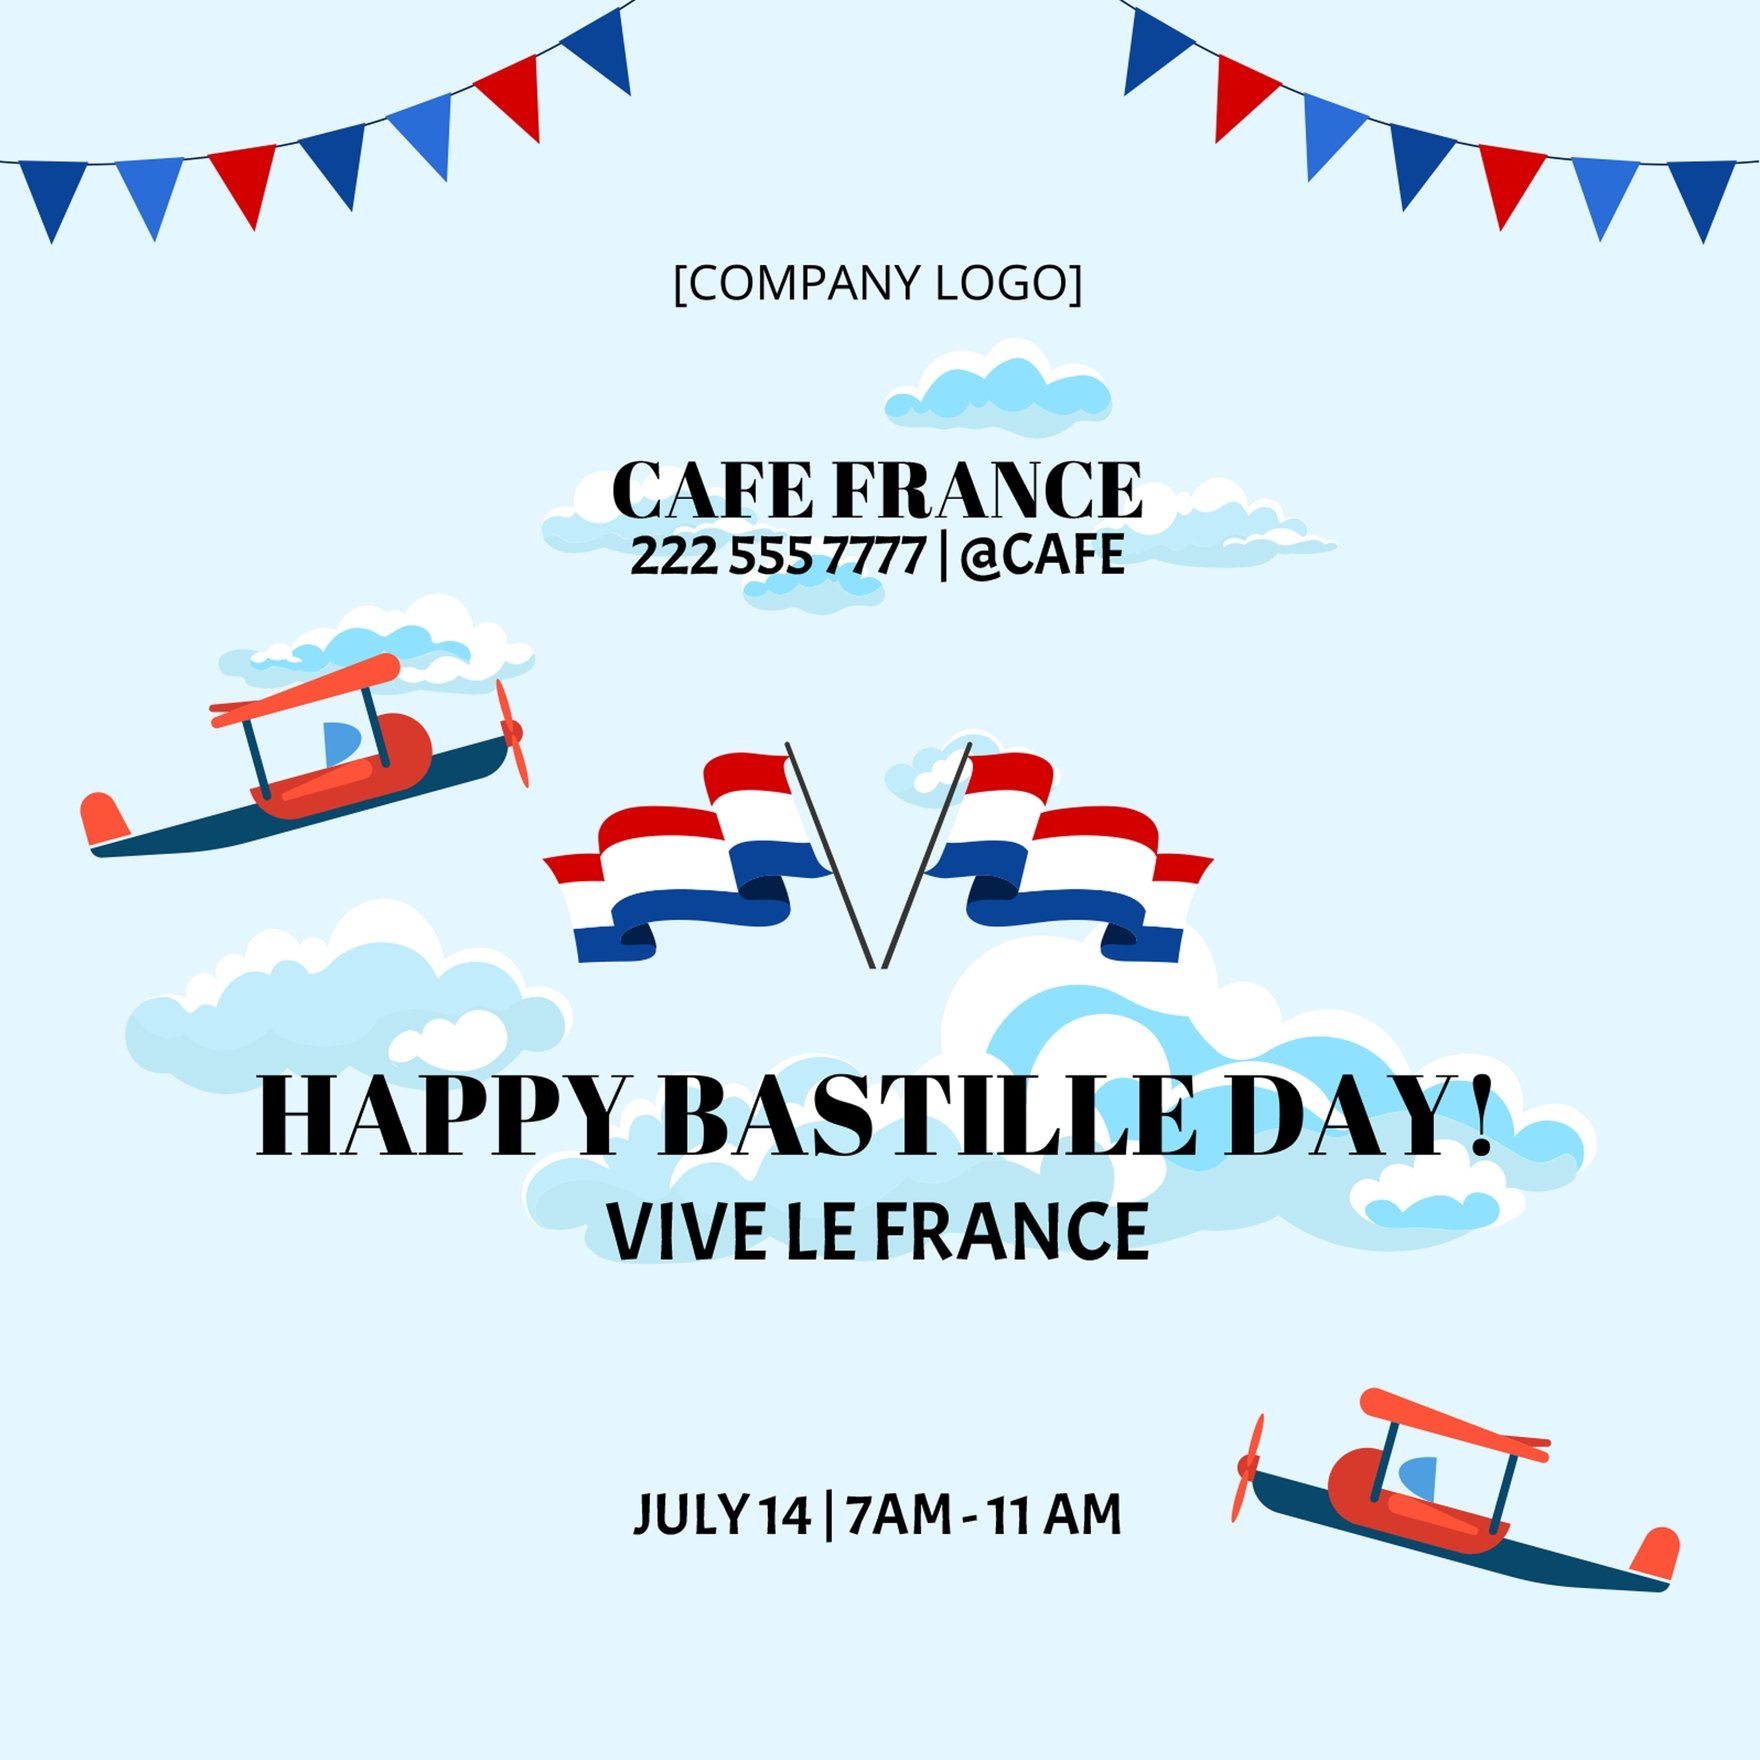 Free Bastille Day Poster Vector in Illustrator, PSD, EPS, SVG, JPG, PNG